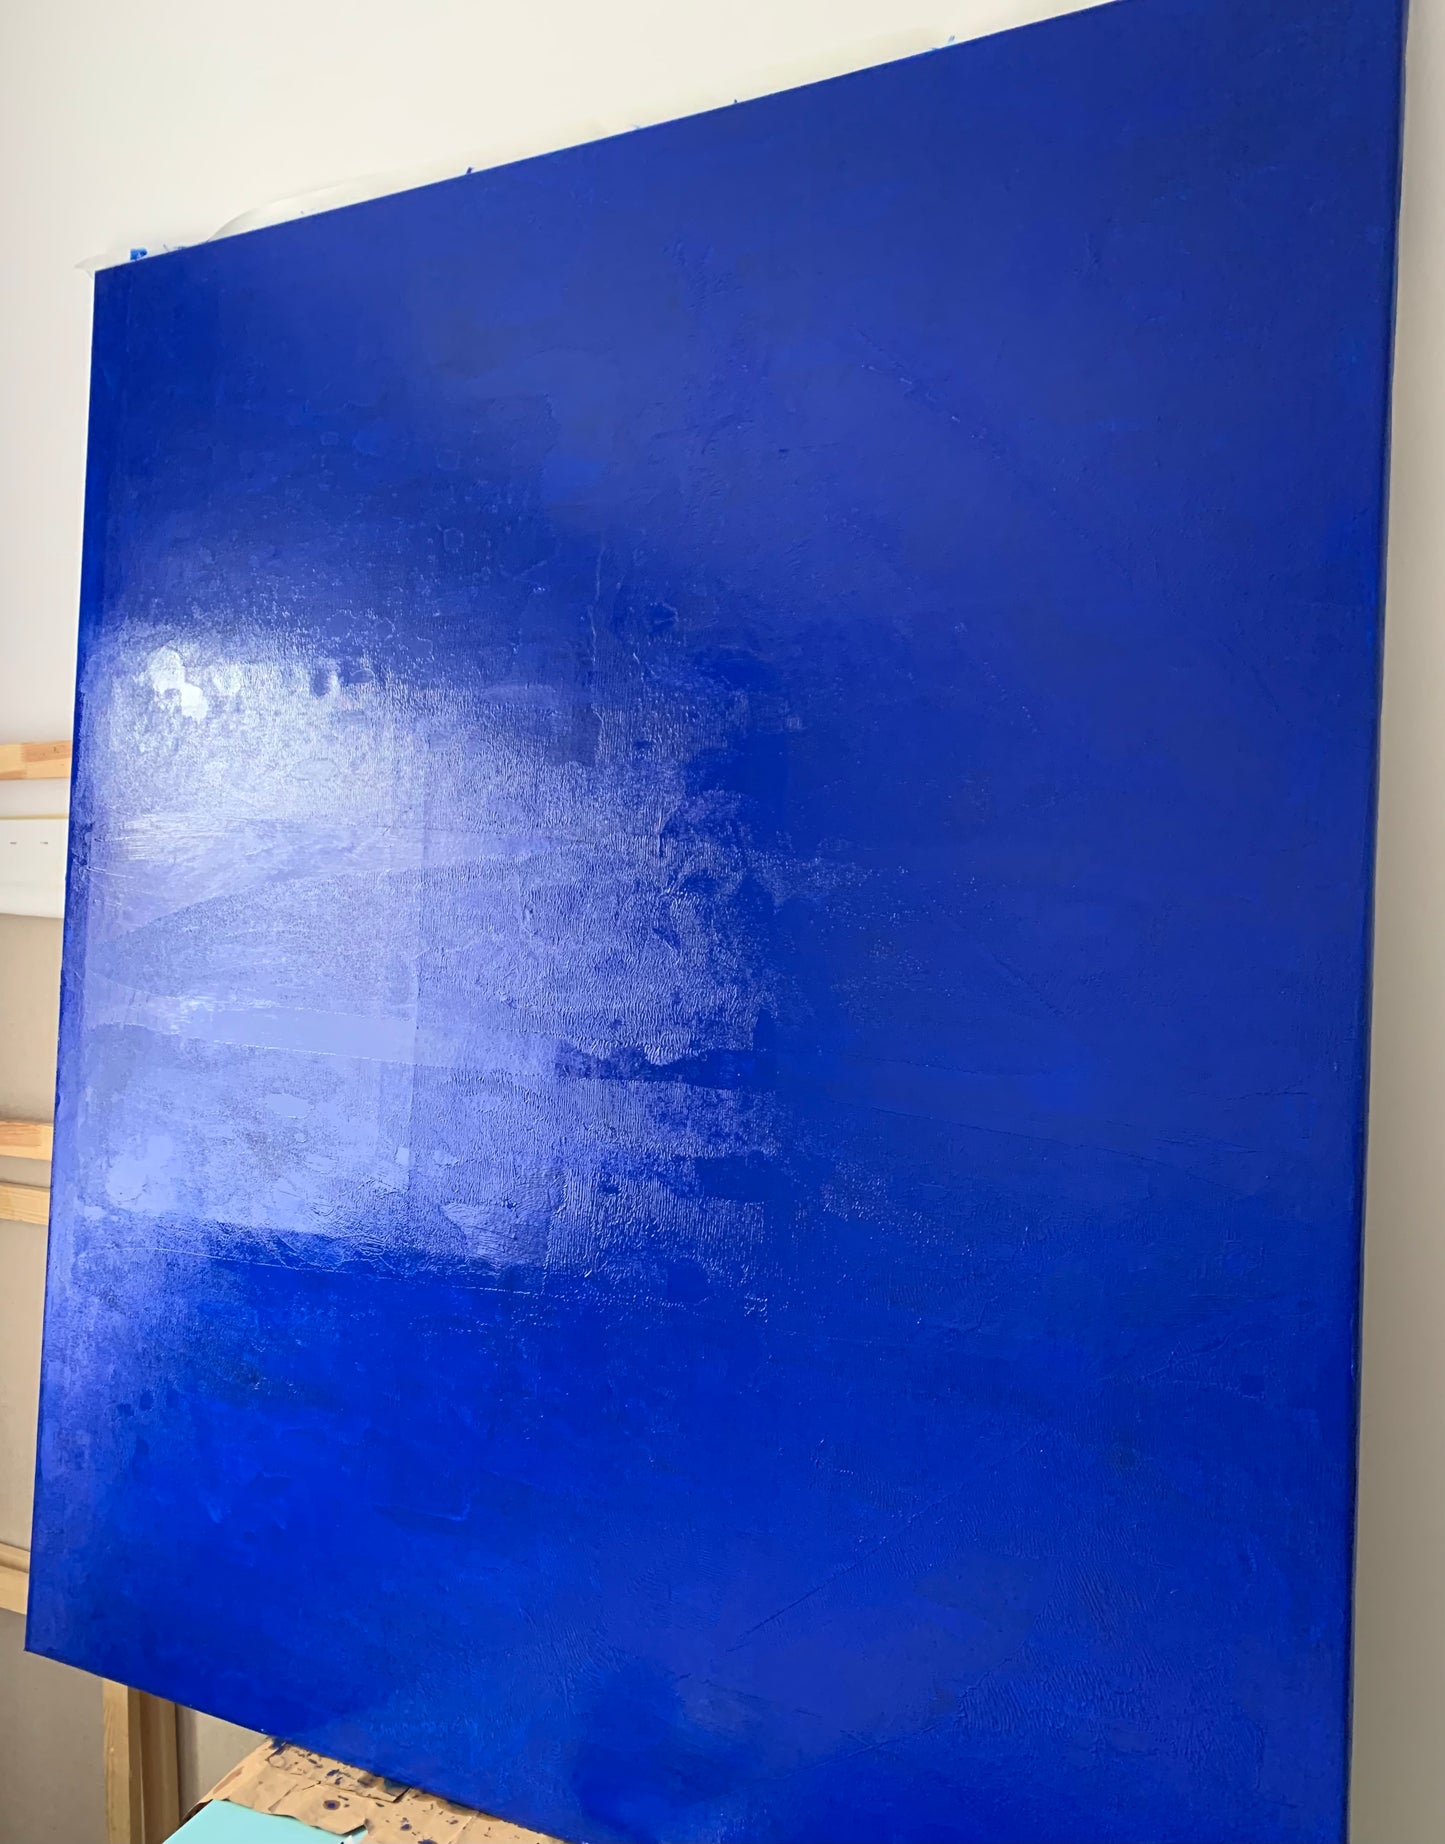 Big blue painting